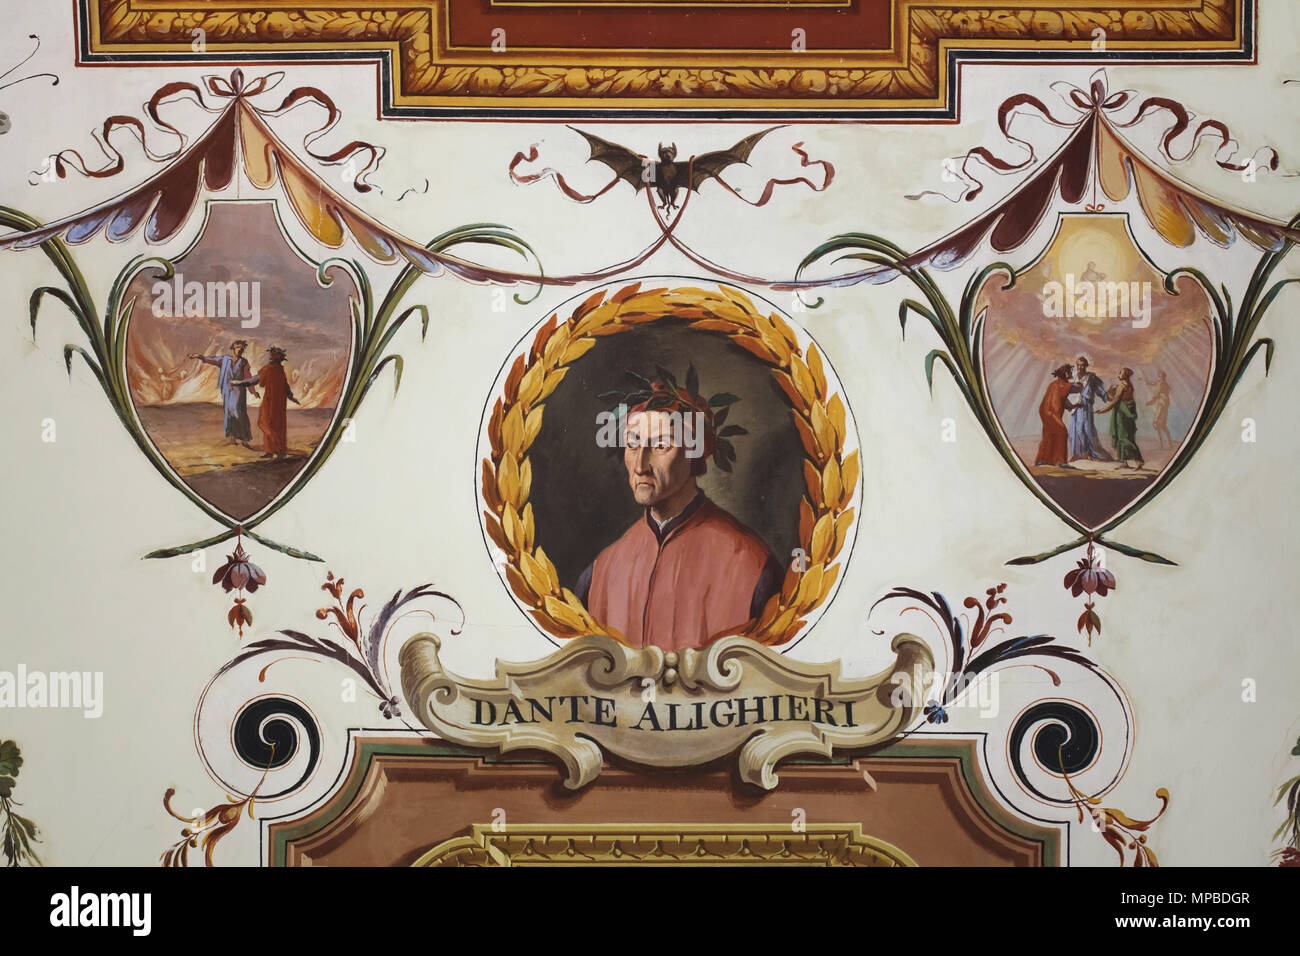 Italian medieval poet Dante Alighieri depicted in the ceiling fresco in the Vasari Corridor in the Uffizi Gallery (Galleria degli Uffizi) in Florence, Tuscany, Italy. Stock Photo